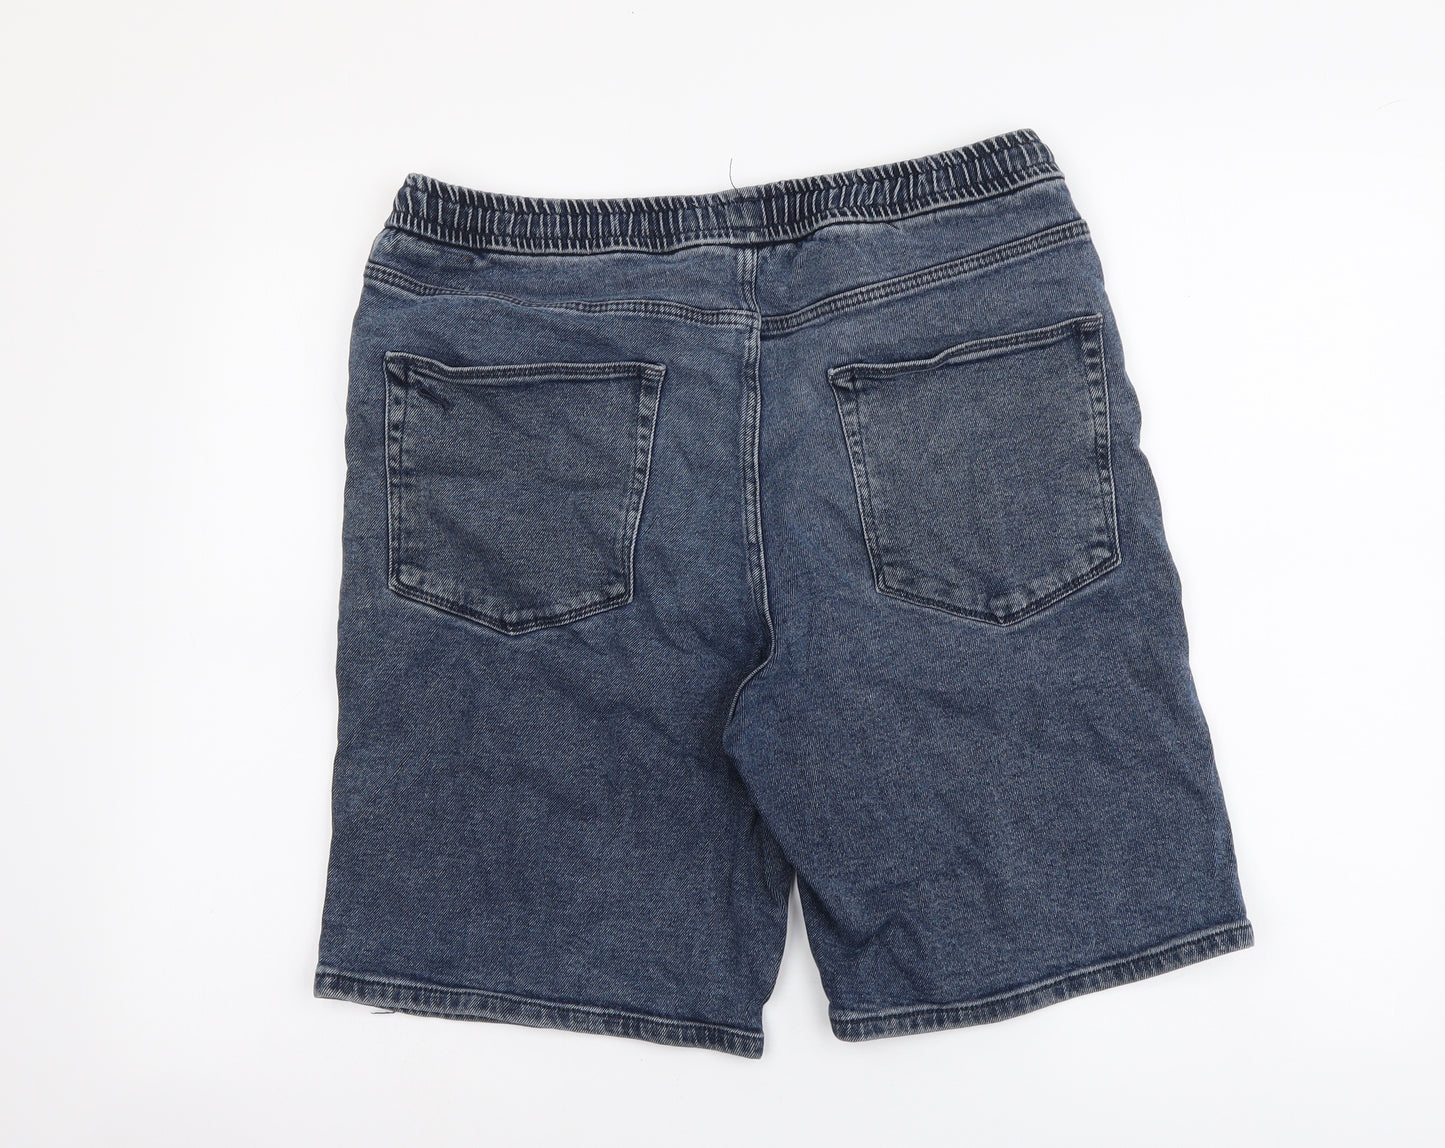 ASOS Mens Blue Cotton Bermuda Shorts Size 32 in L9 in Regular Drawstring